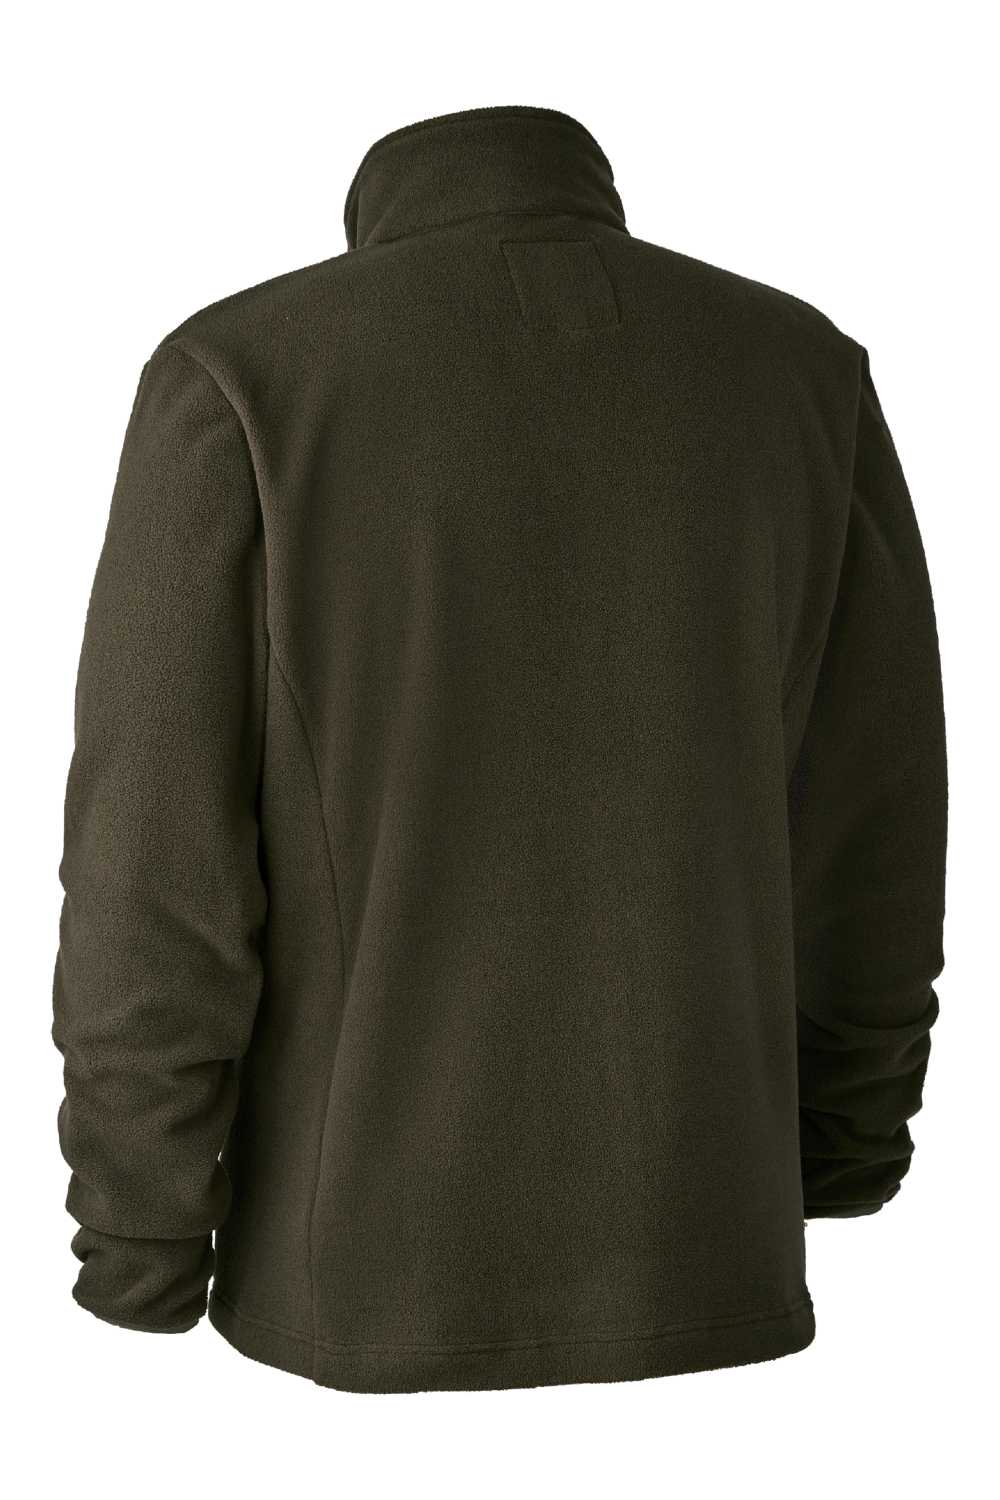 Deerhunter Chasse Fleece Jacket - Hollands Country Clothing